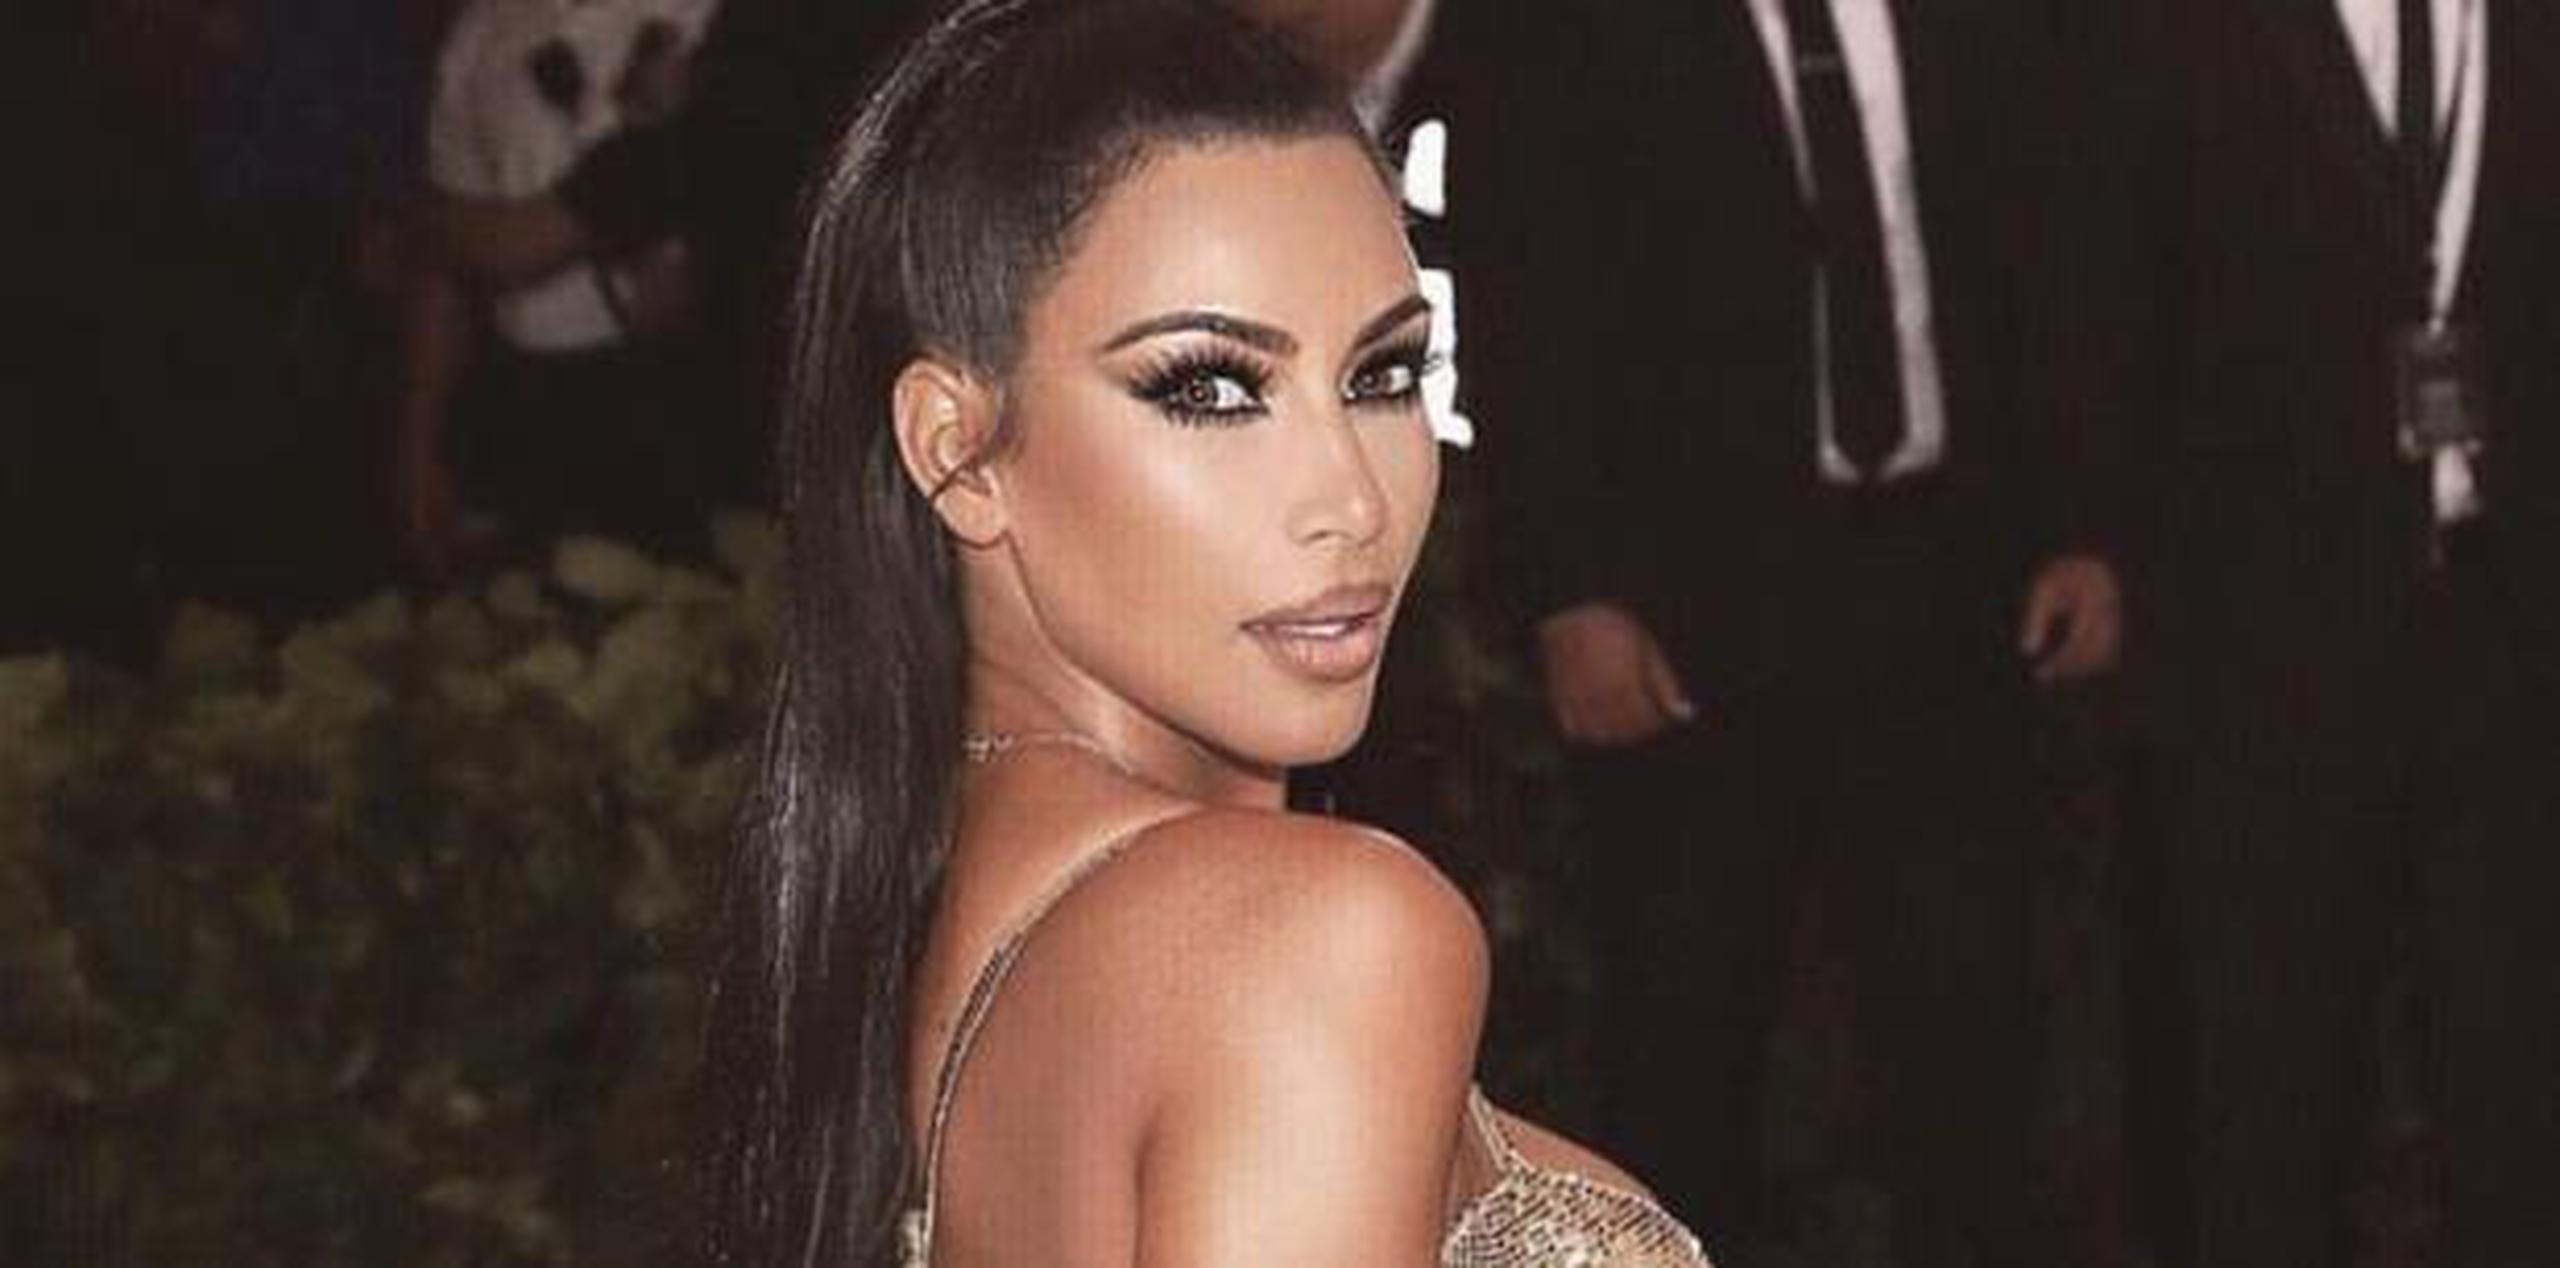 Kim Kardashian aseguró que continuará ayudando a personas que considere han sido injustamente sentenciadas. (Instagram / @kimkardashian)